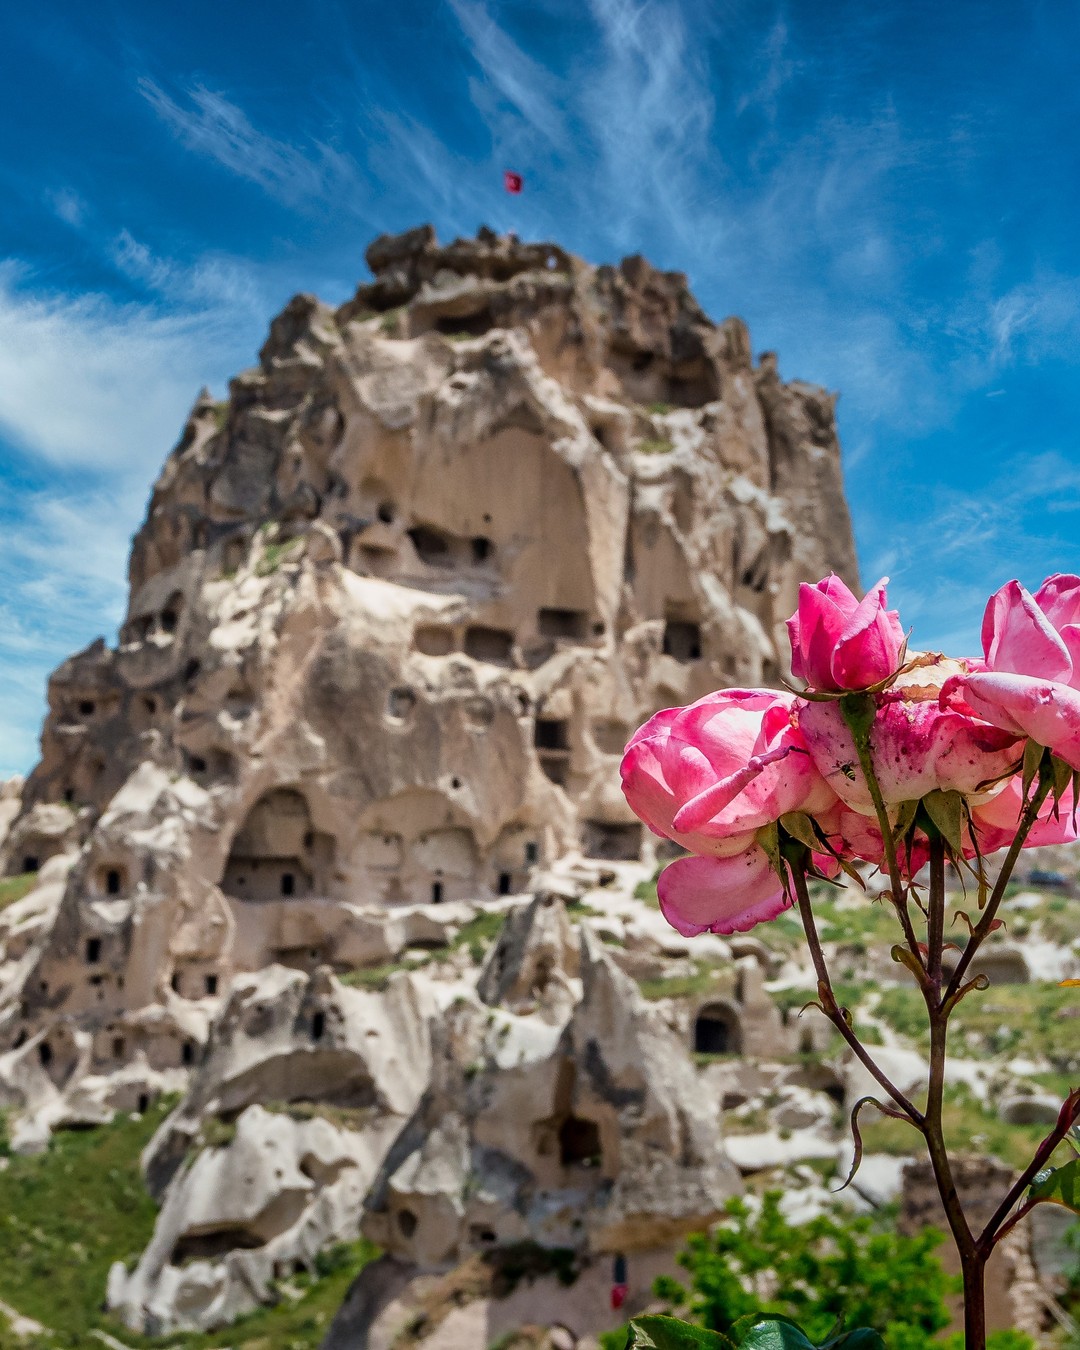 Cappadocia’s unique landscape of fairy chimneys, towering boulders and ridged valleys peppered with caves.

A bizarre and spectacular landscape largely sculpted by erosion, Turkey's Göreme National Park is littered with troglodyte dwellings and subterranean towns – the remains of a human habitat dating back to the 4th century.
-
-
-
-
-
-
-
#Turkey #cappadocia #kapadokya #goreme #Nevşehir #Uçhisar #ürgüp #cavehotel #Göreme #lonelyplanet #iamatraveler #stillatraveler #suitcasetravels #tlpicks #GoTurkeyTourism #OnlyInTürkiye #SafeTourismTürkiy